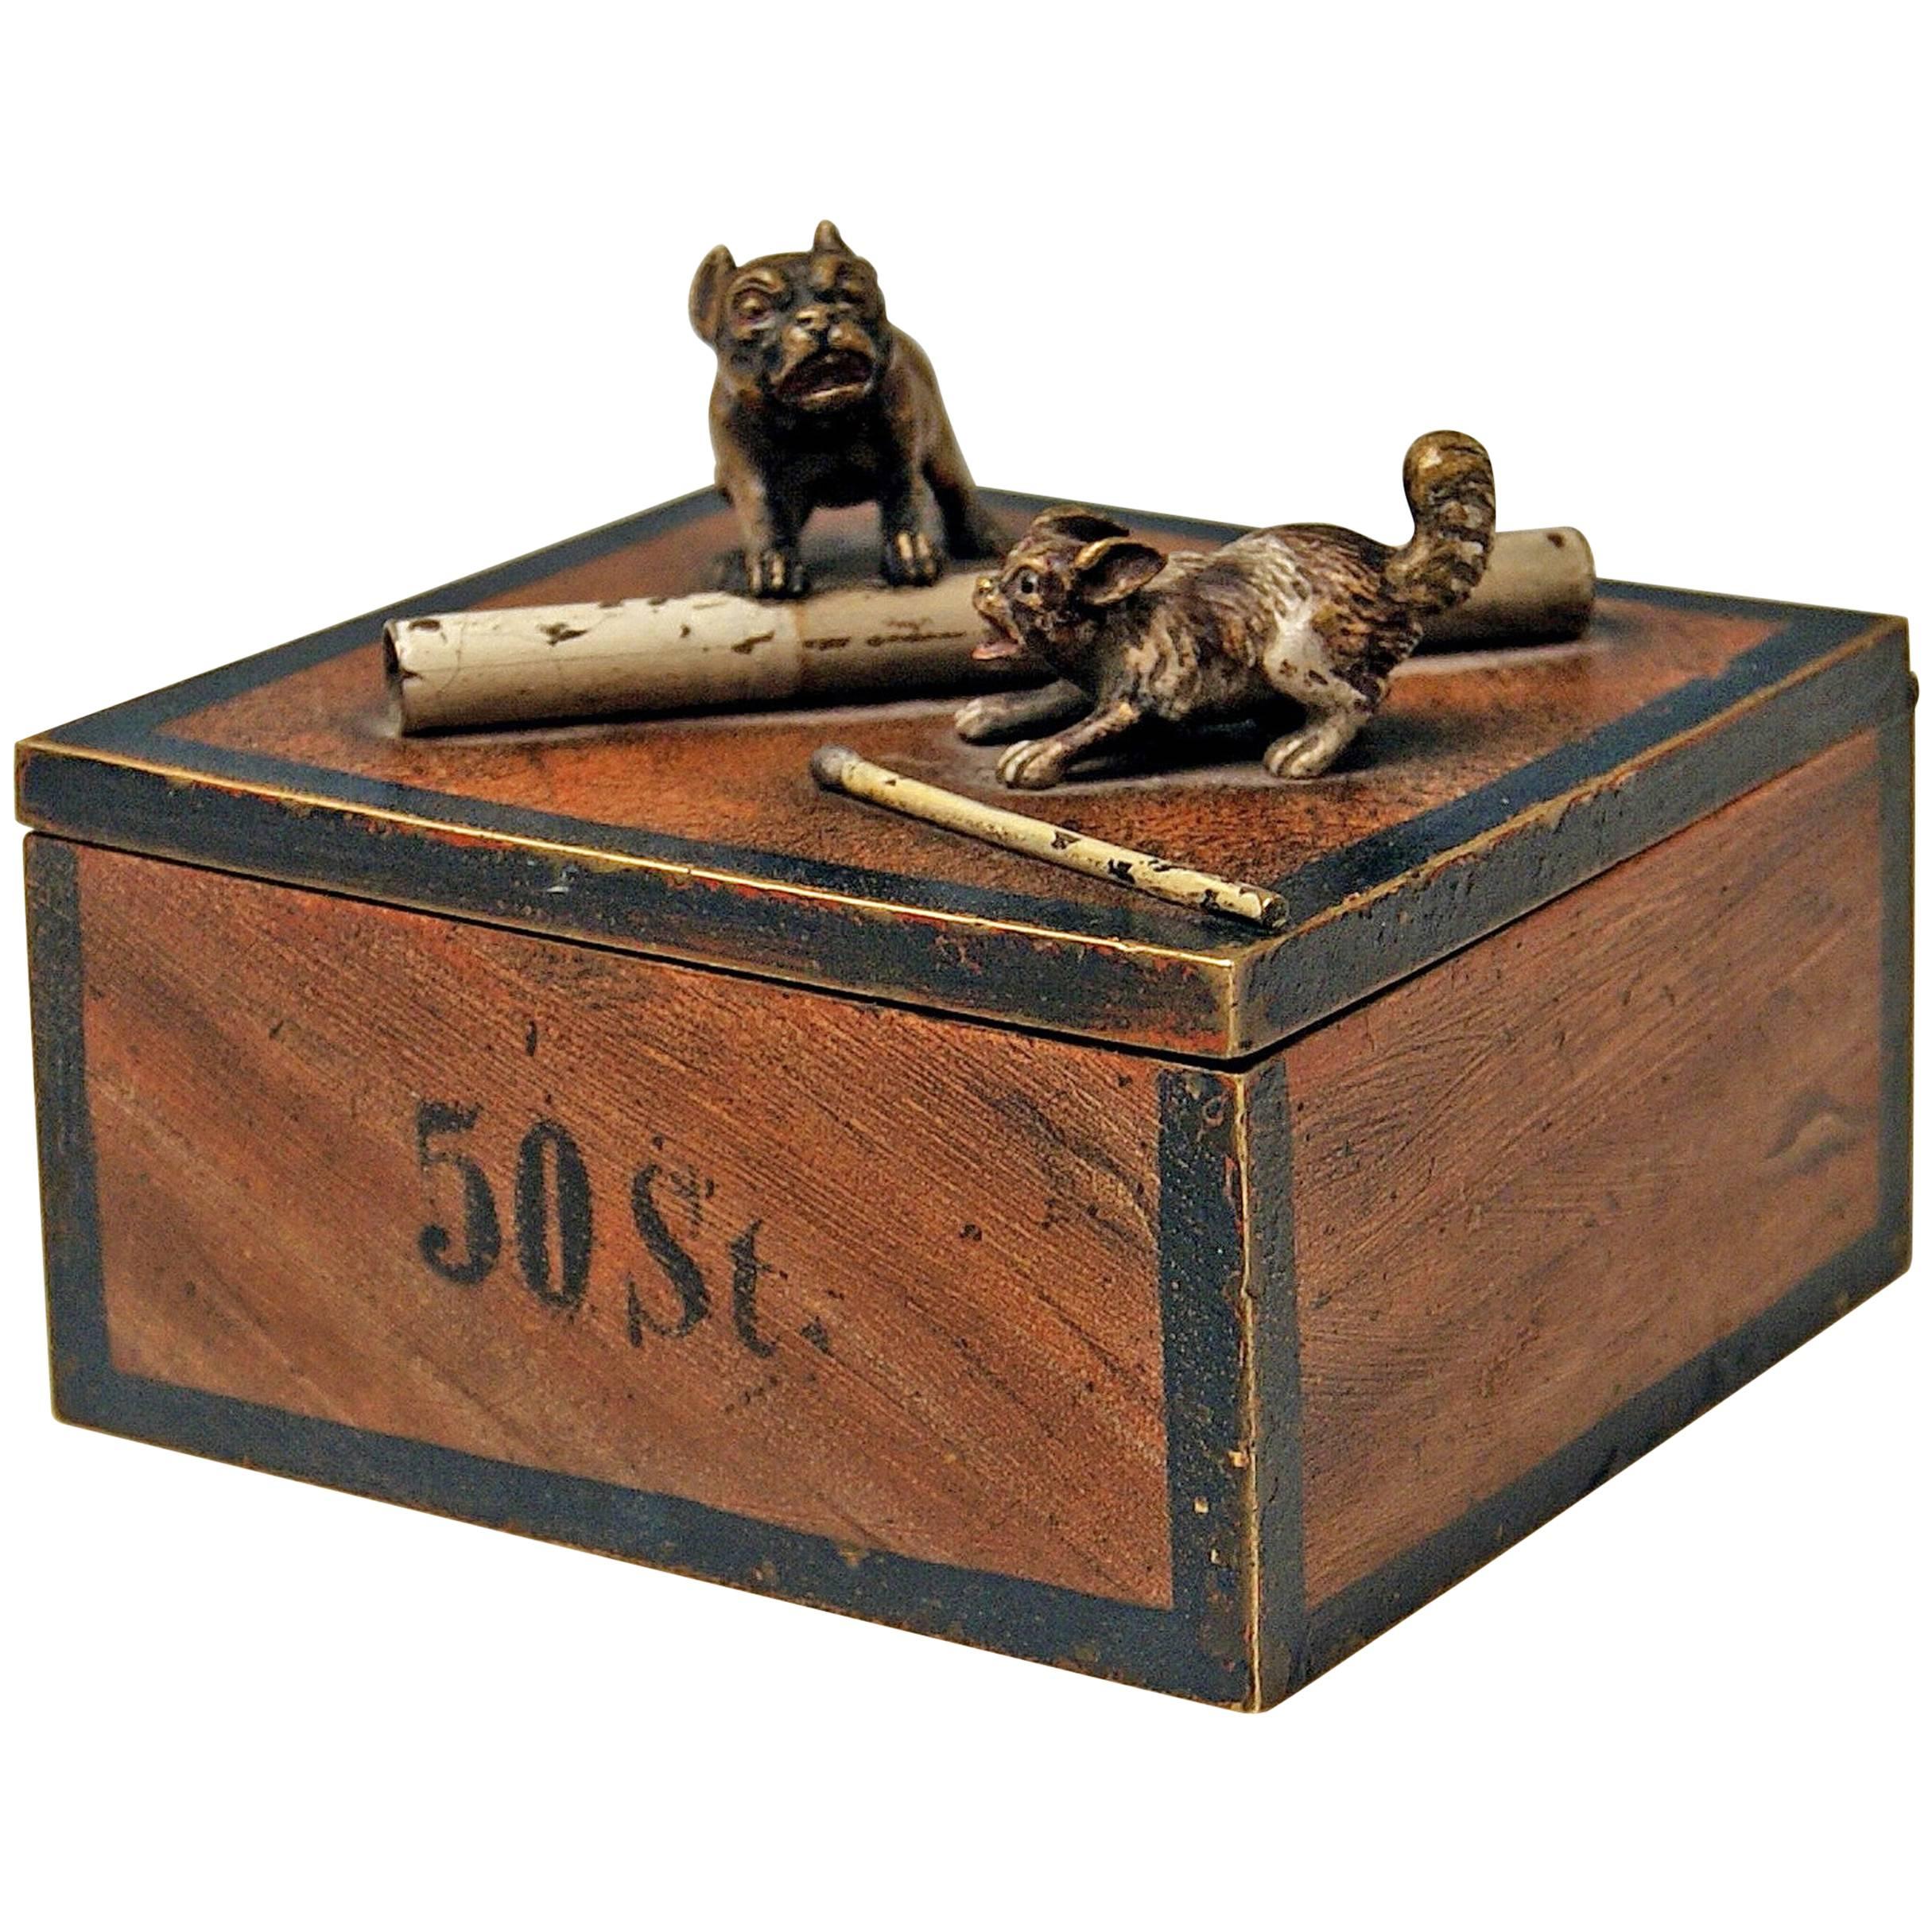 Vienna Bronze Tobacco Box with Dogs Pugs by Franz Bergman'n', circa 1890-1900